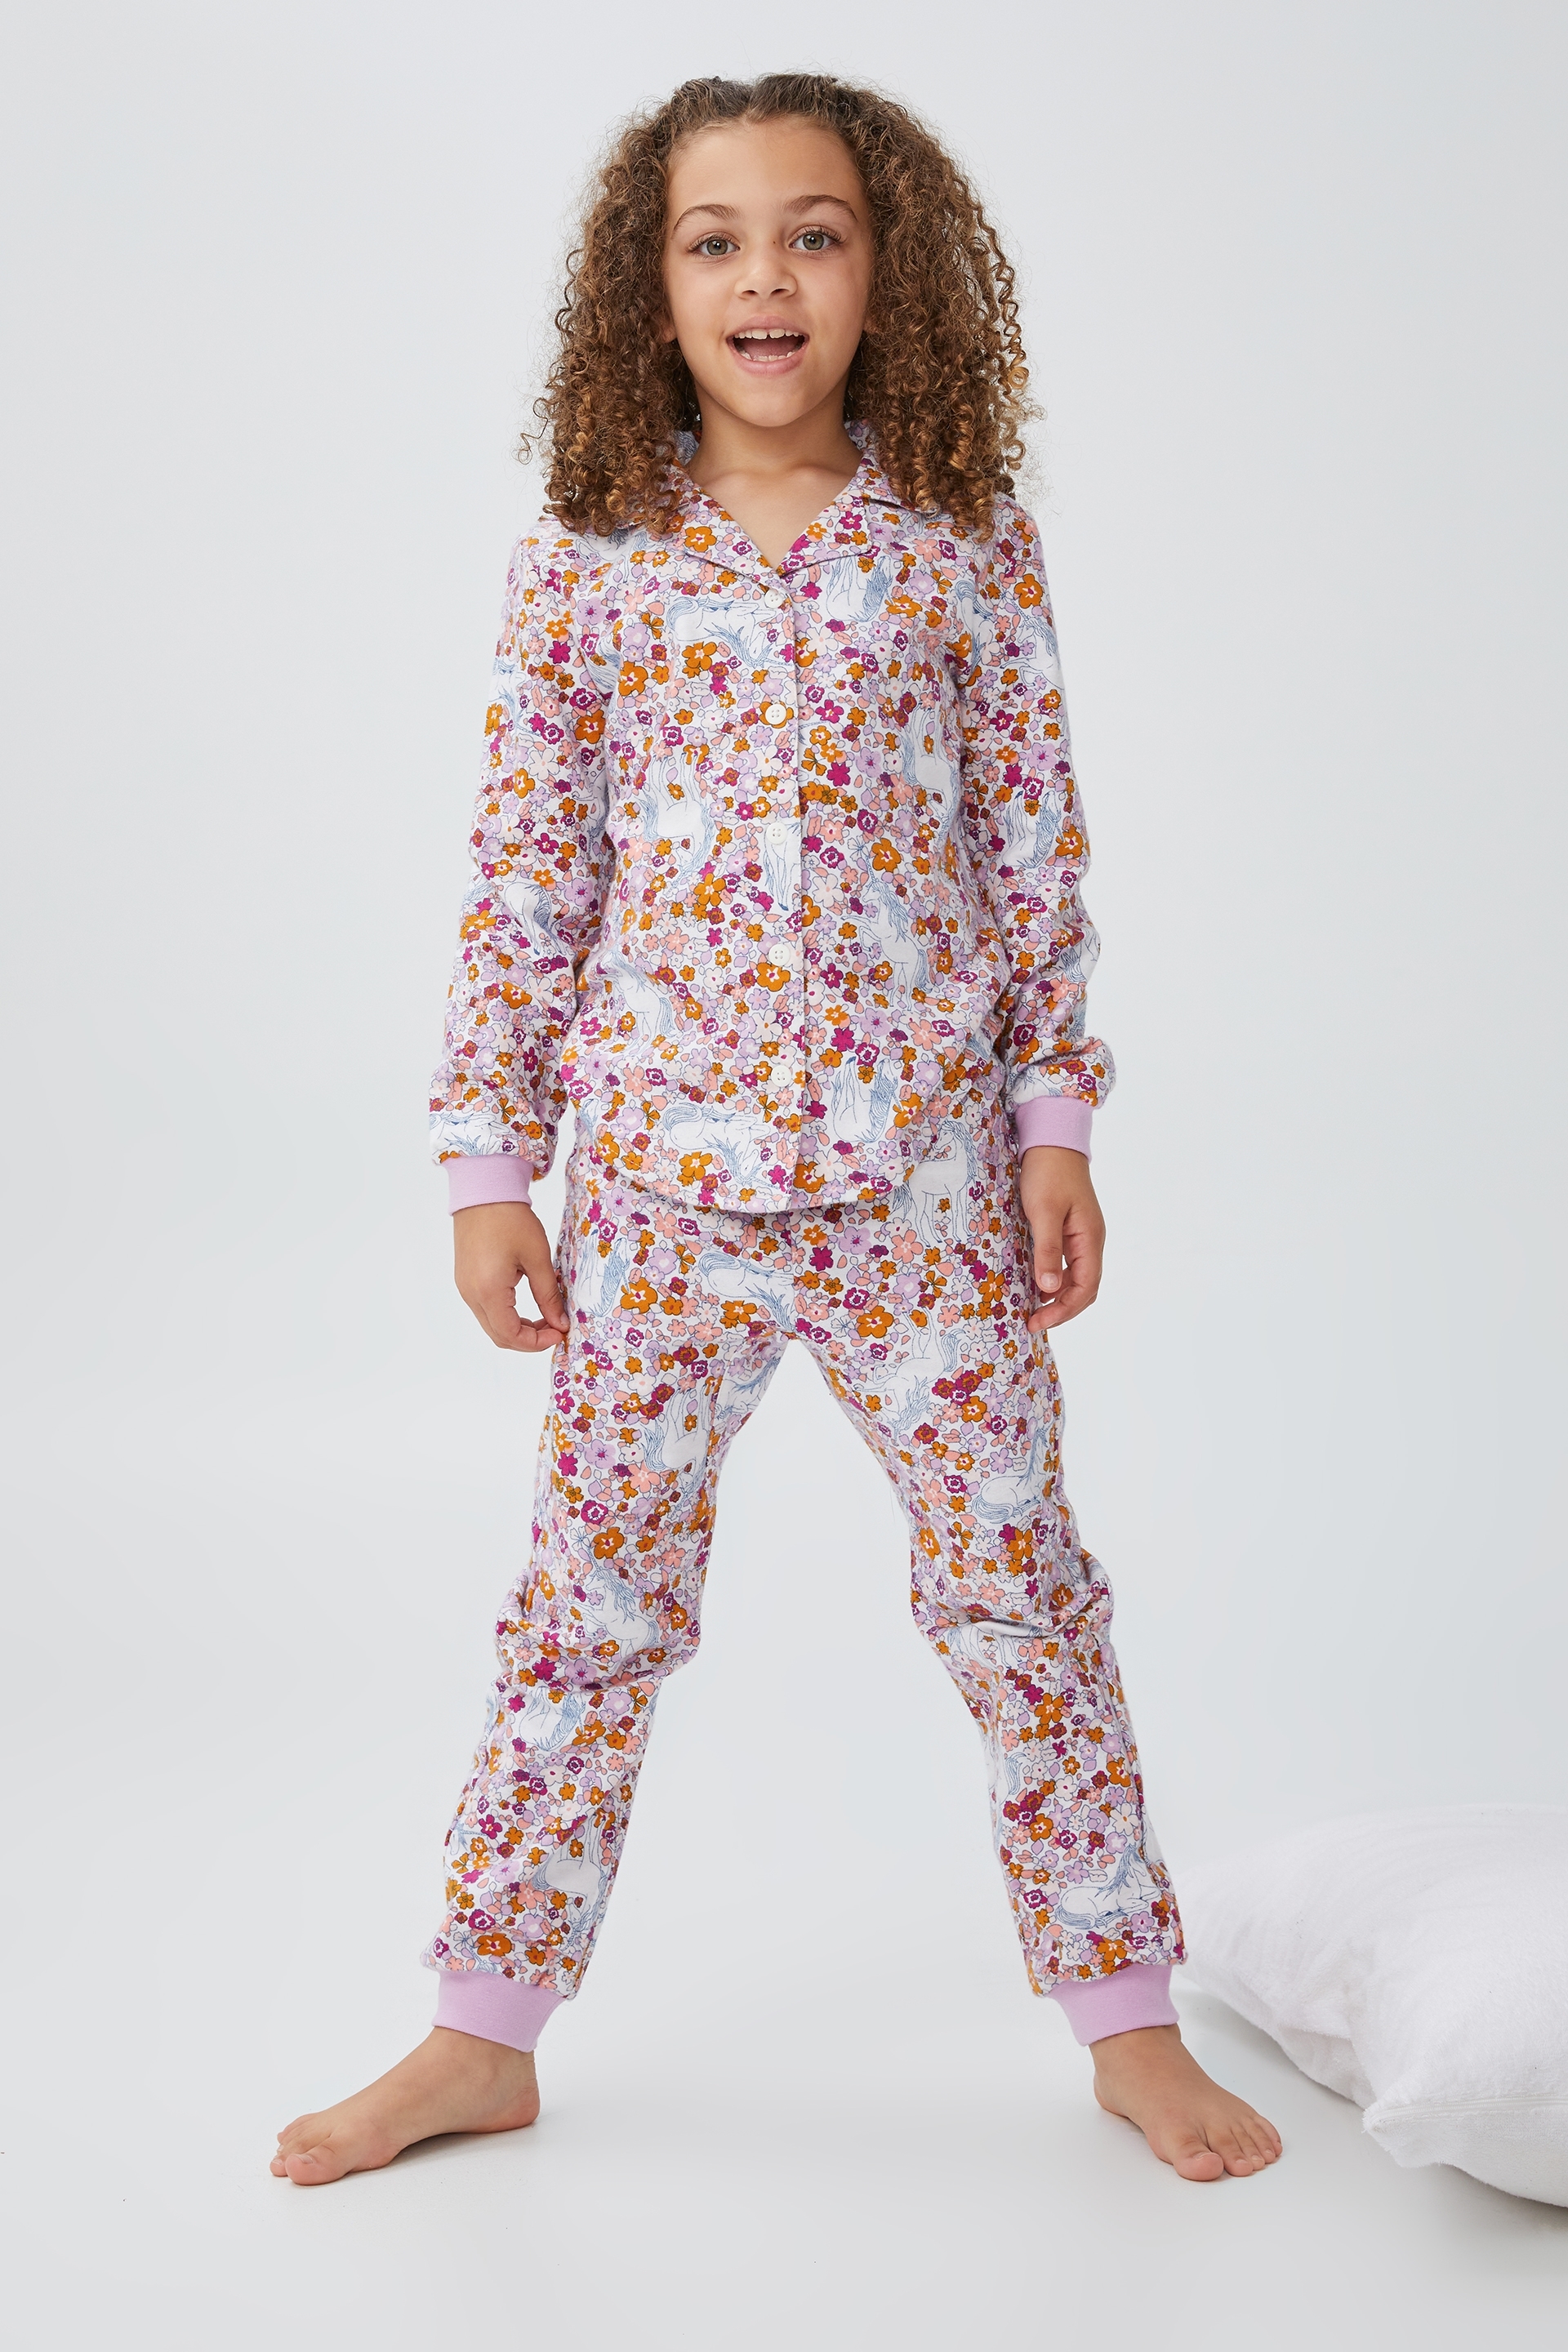 Cotton On Kids - Angie Long Sleeve Pyjama Set - Vanilla pale violet unicorn garden